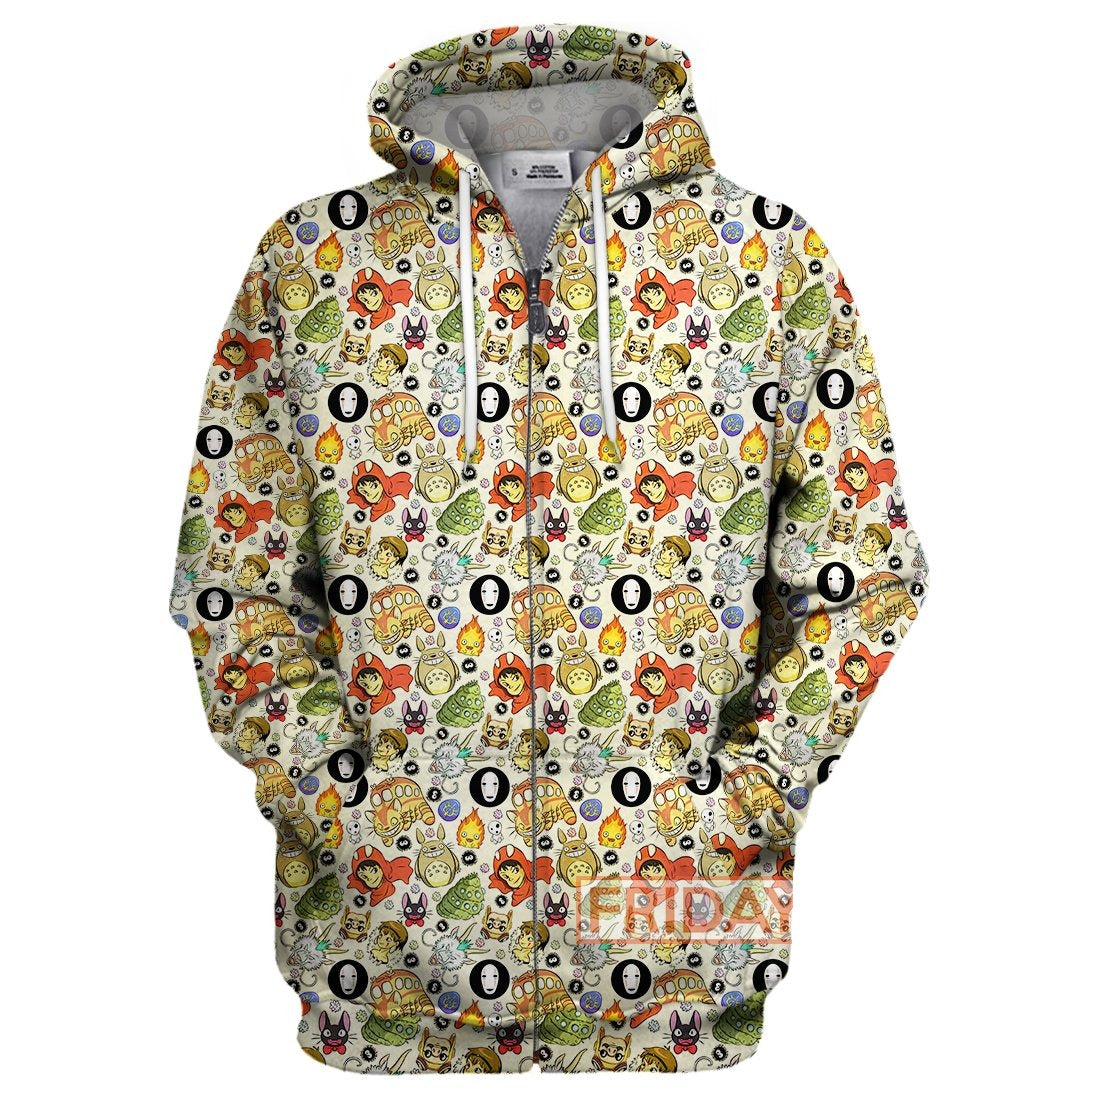 Unifinz GB Hoodie GB All Characters Emoji Spirited Away Totoro T-shirt Amazing GB Shirt Sweater Tank 2026